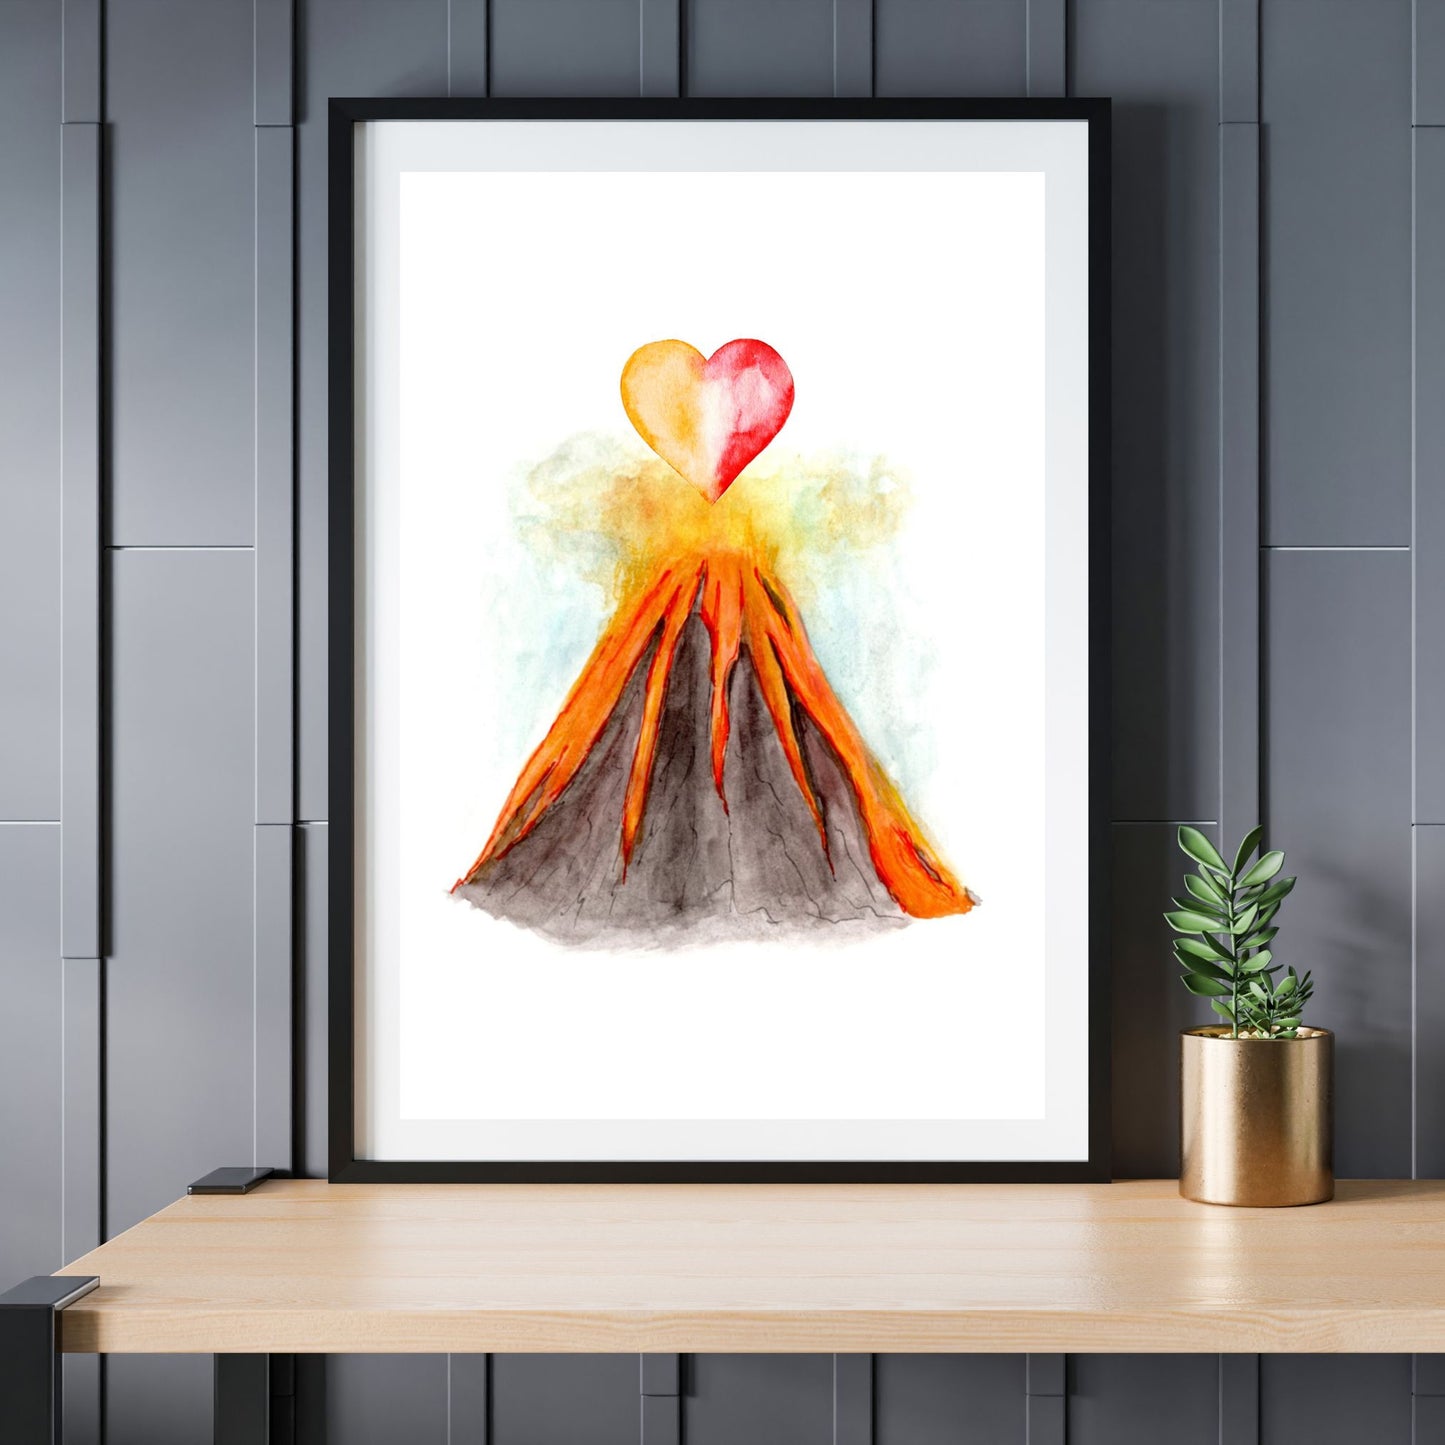 Volcano art print, Volcano love, Anniversary gift, Nursery decor, Baby shower gift, Cute wall decor, Gallery wall art, Cute volcano print